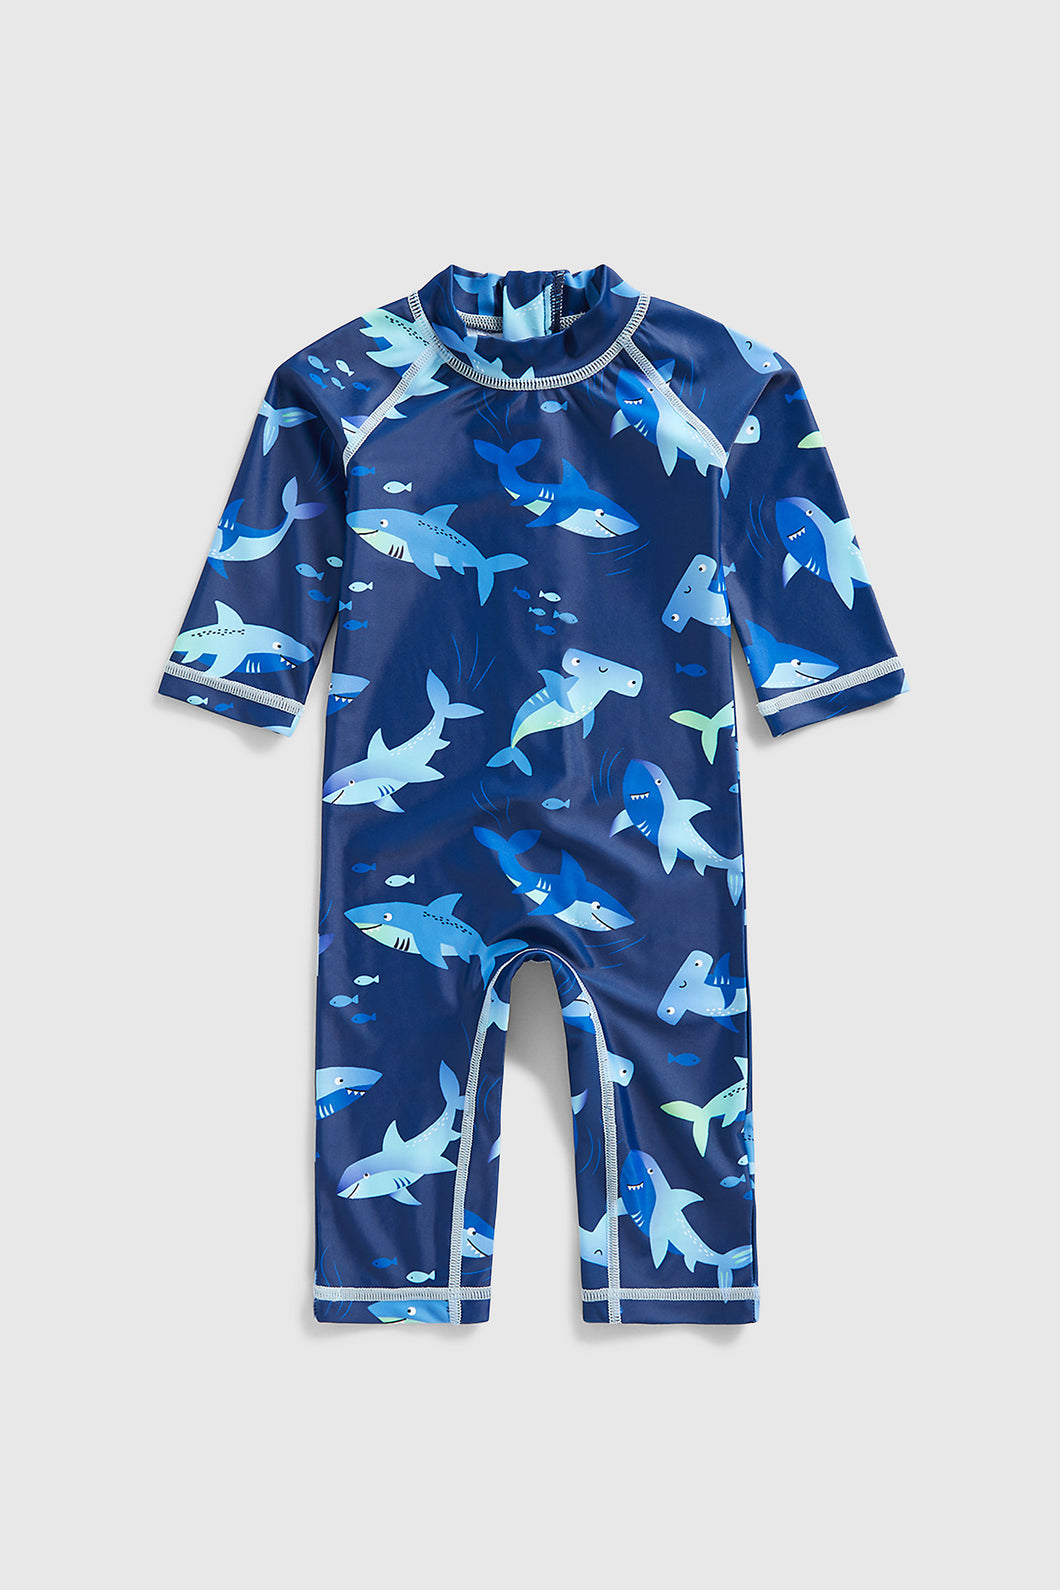 Mothercare Shark Sunsafe Suit Upf50+